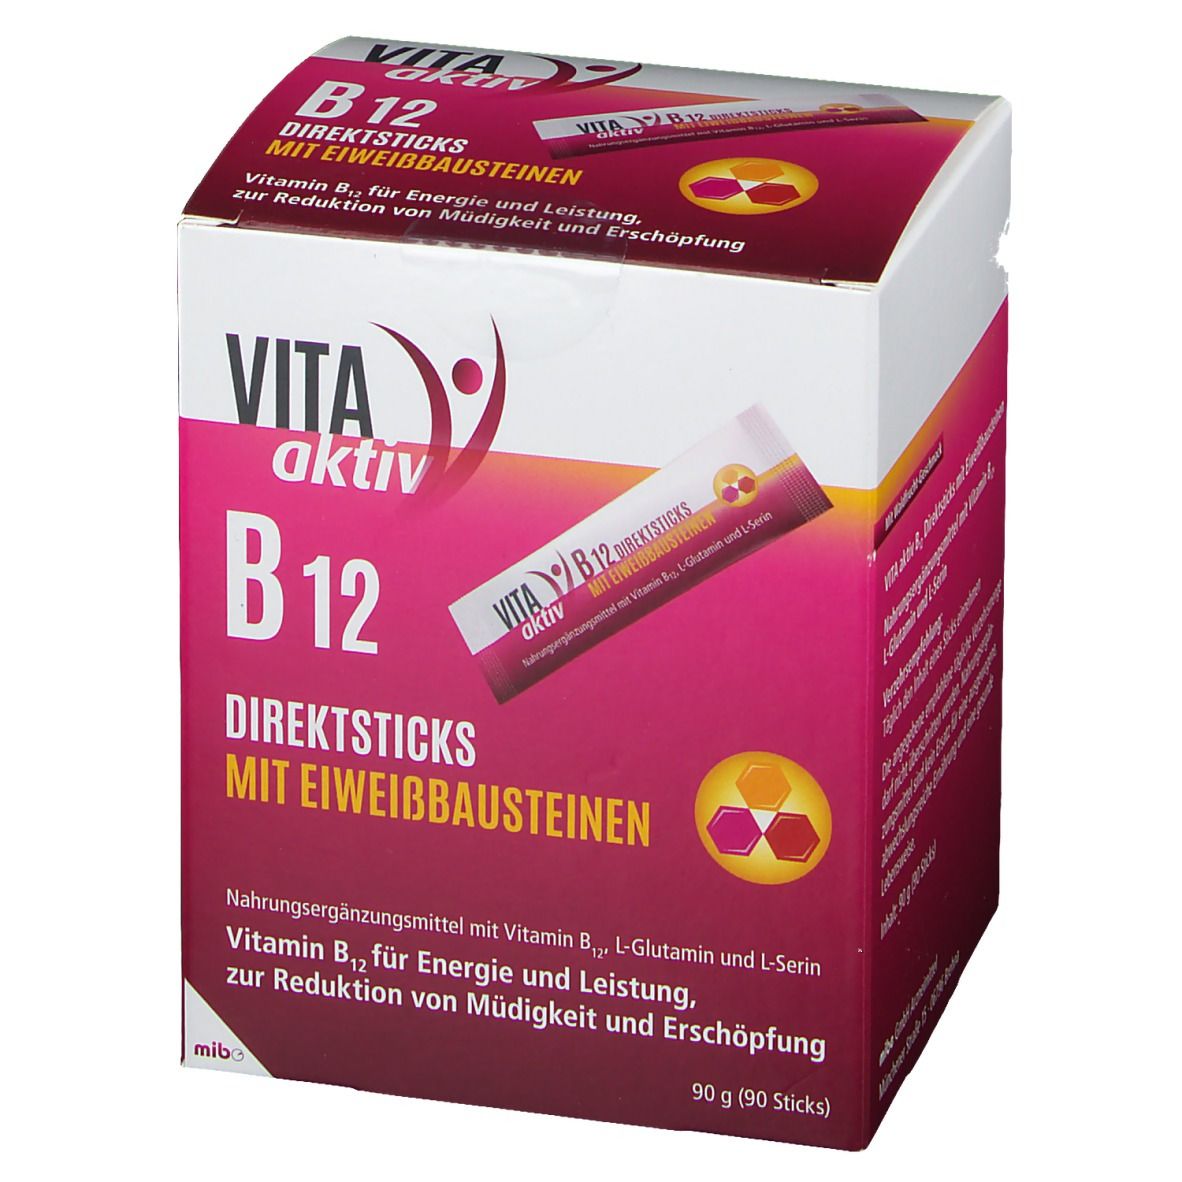 VITA aktiv B12